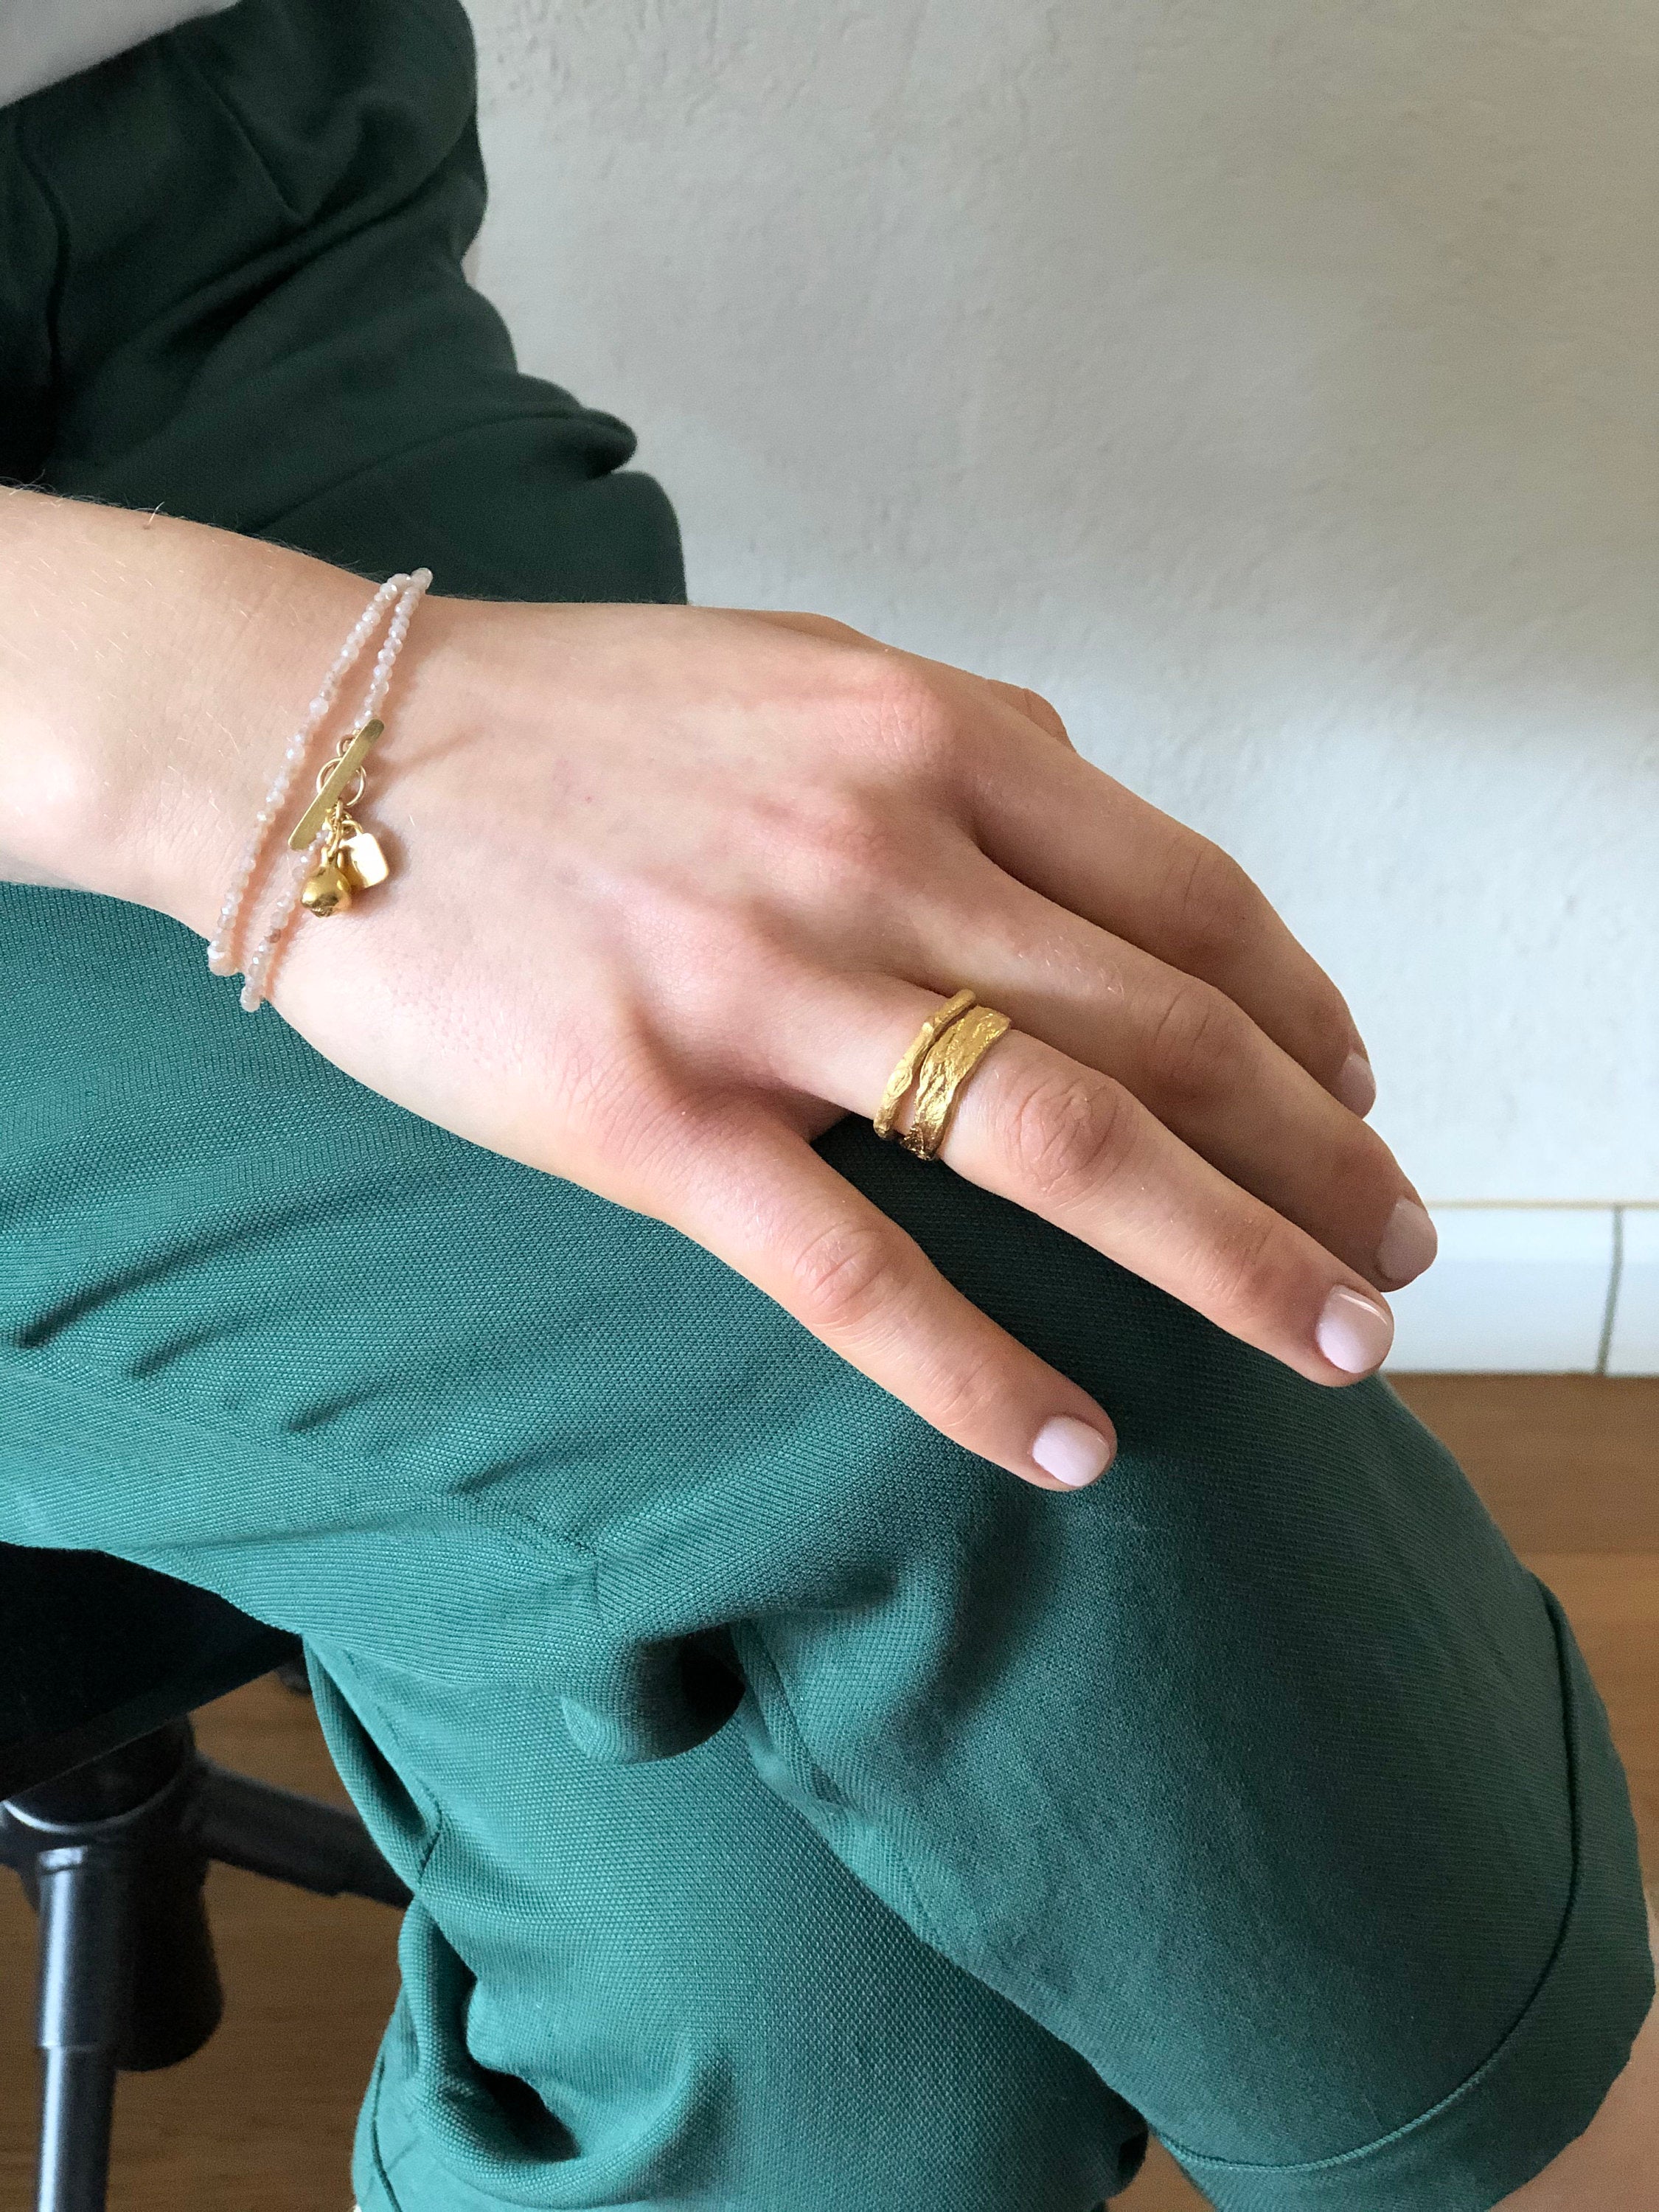 Twig Wedding Ring / 14K Gold Ring / Nature Inspired Ring / Branch Ring / Organic Solid Gold Ring / Leaf Ring / Woodland Ring / Hadas Shaham - hs